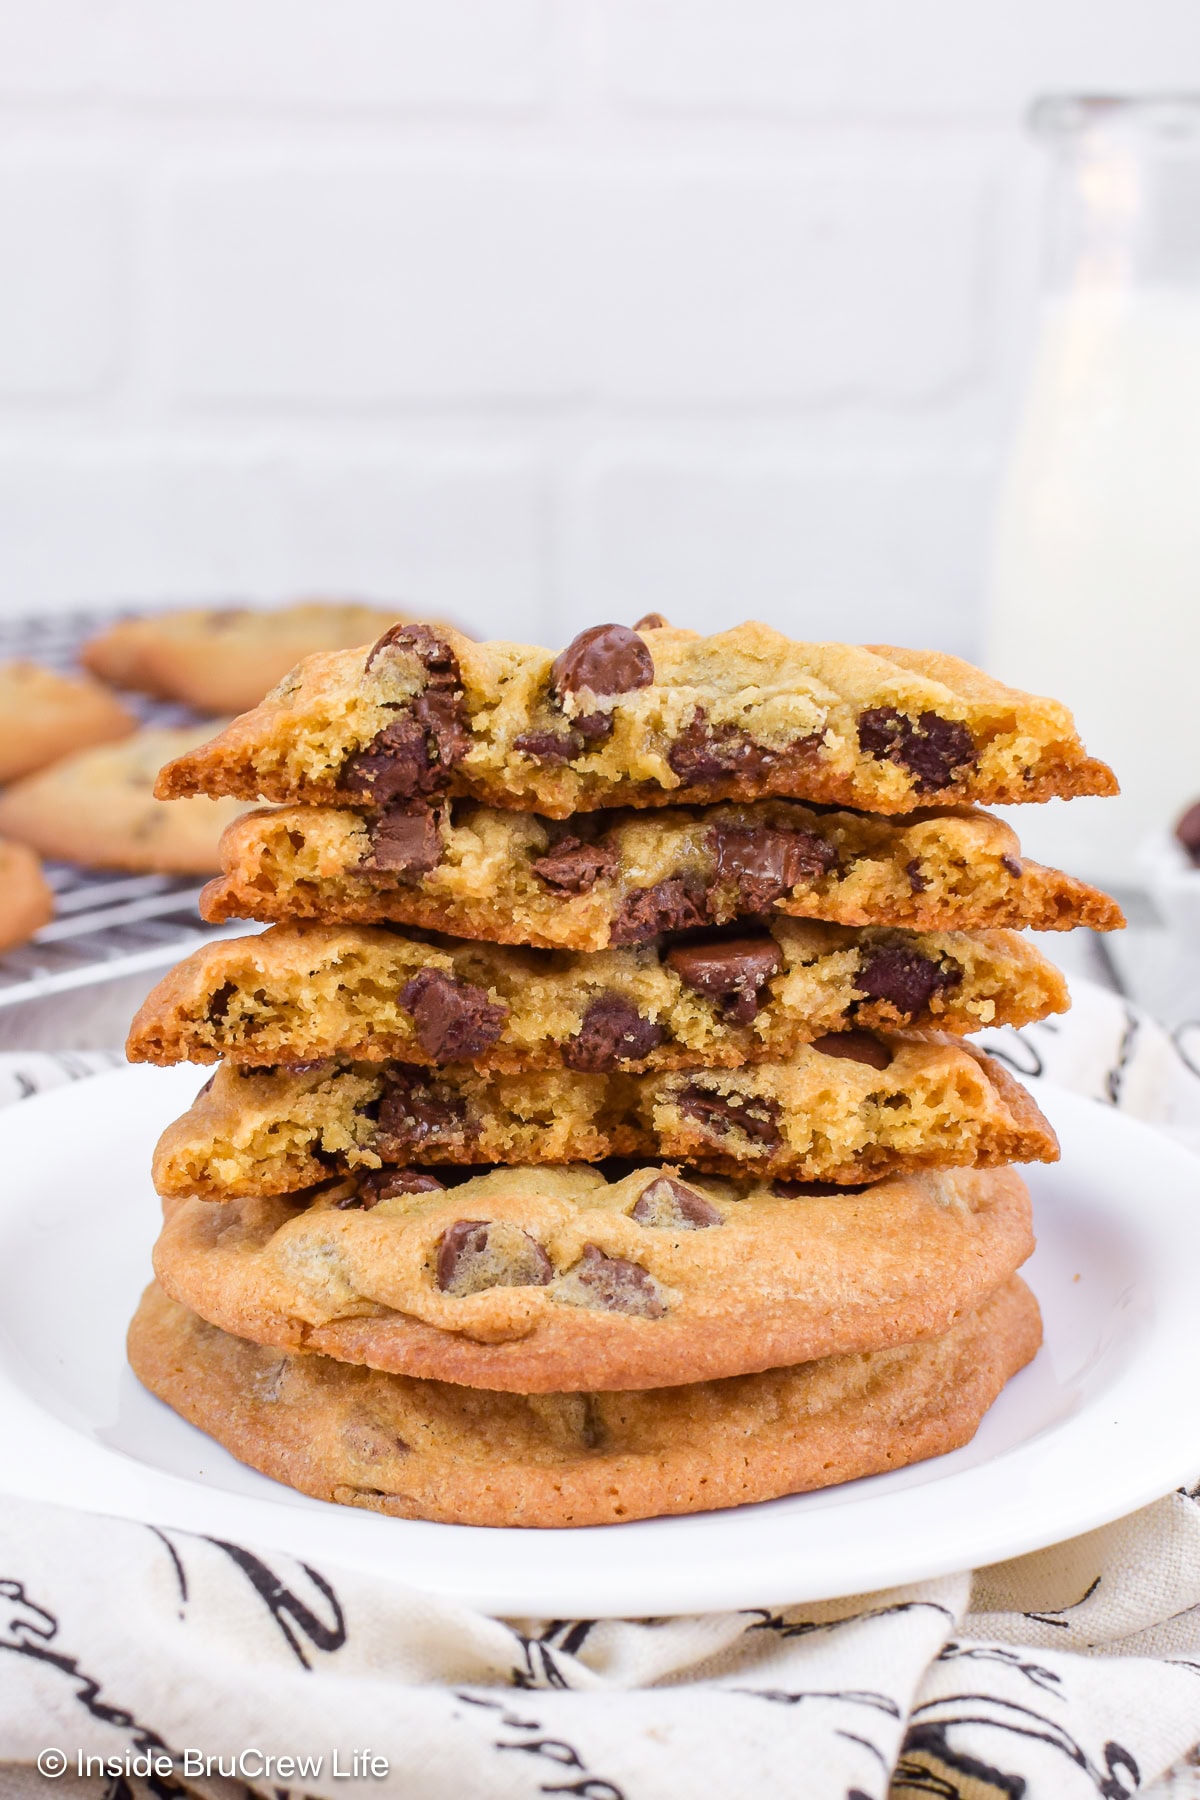 A stack of warm chocolate chip cookies broken in half.